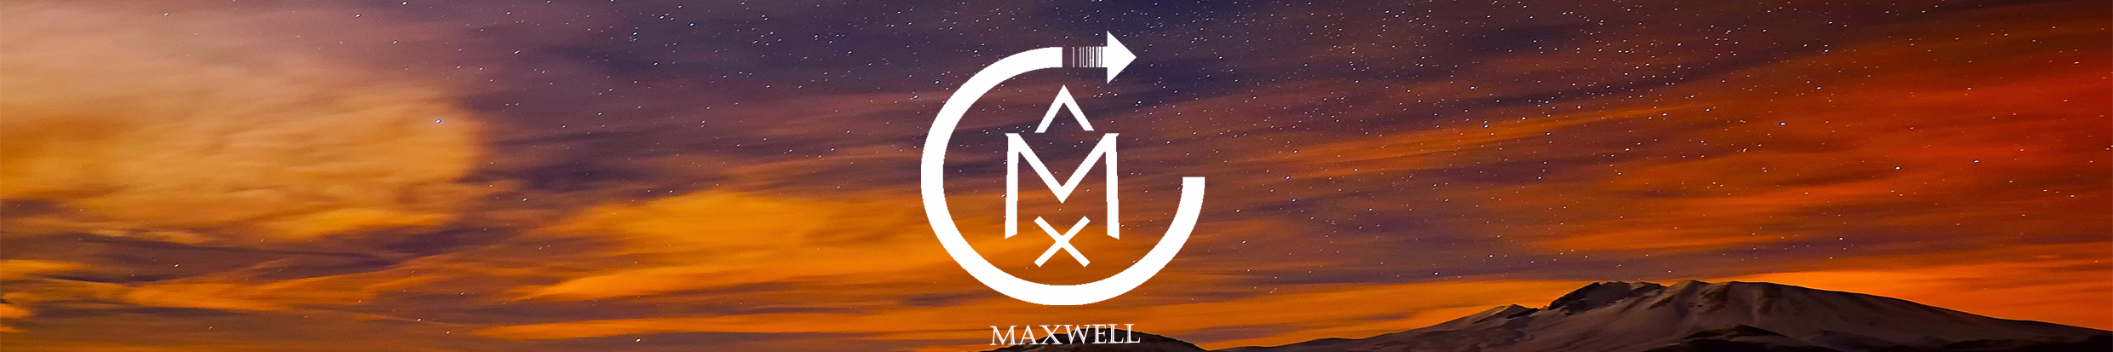 Maxwell M&M